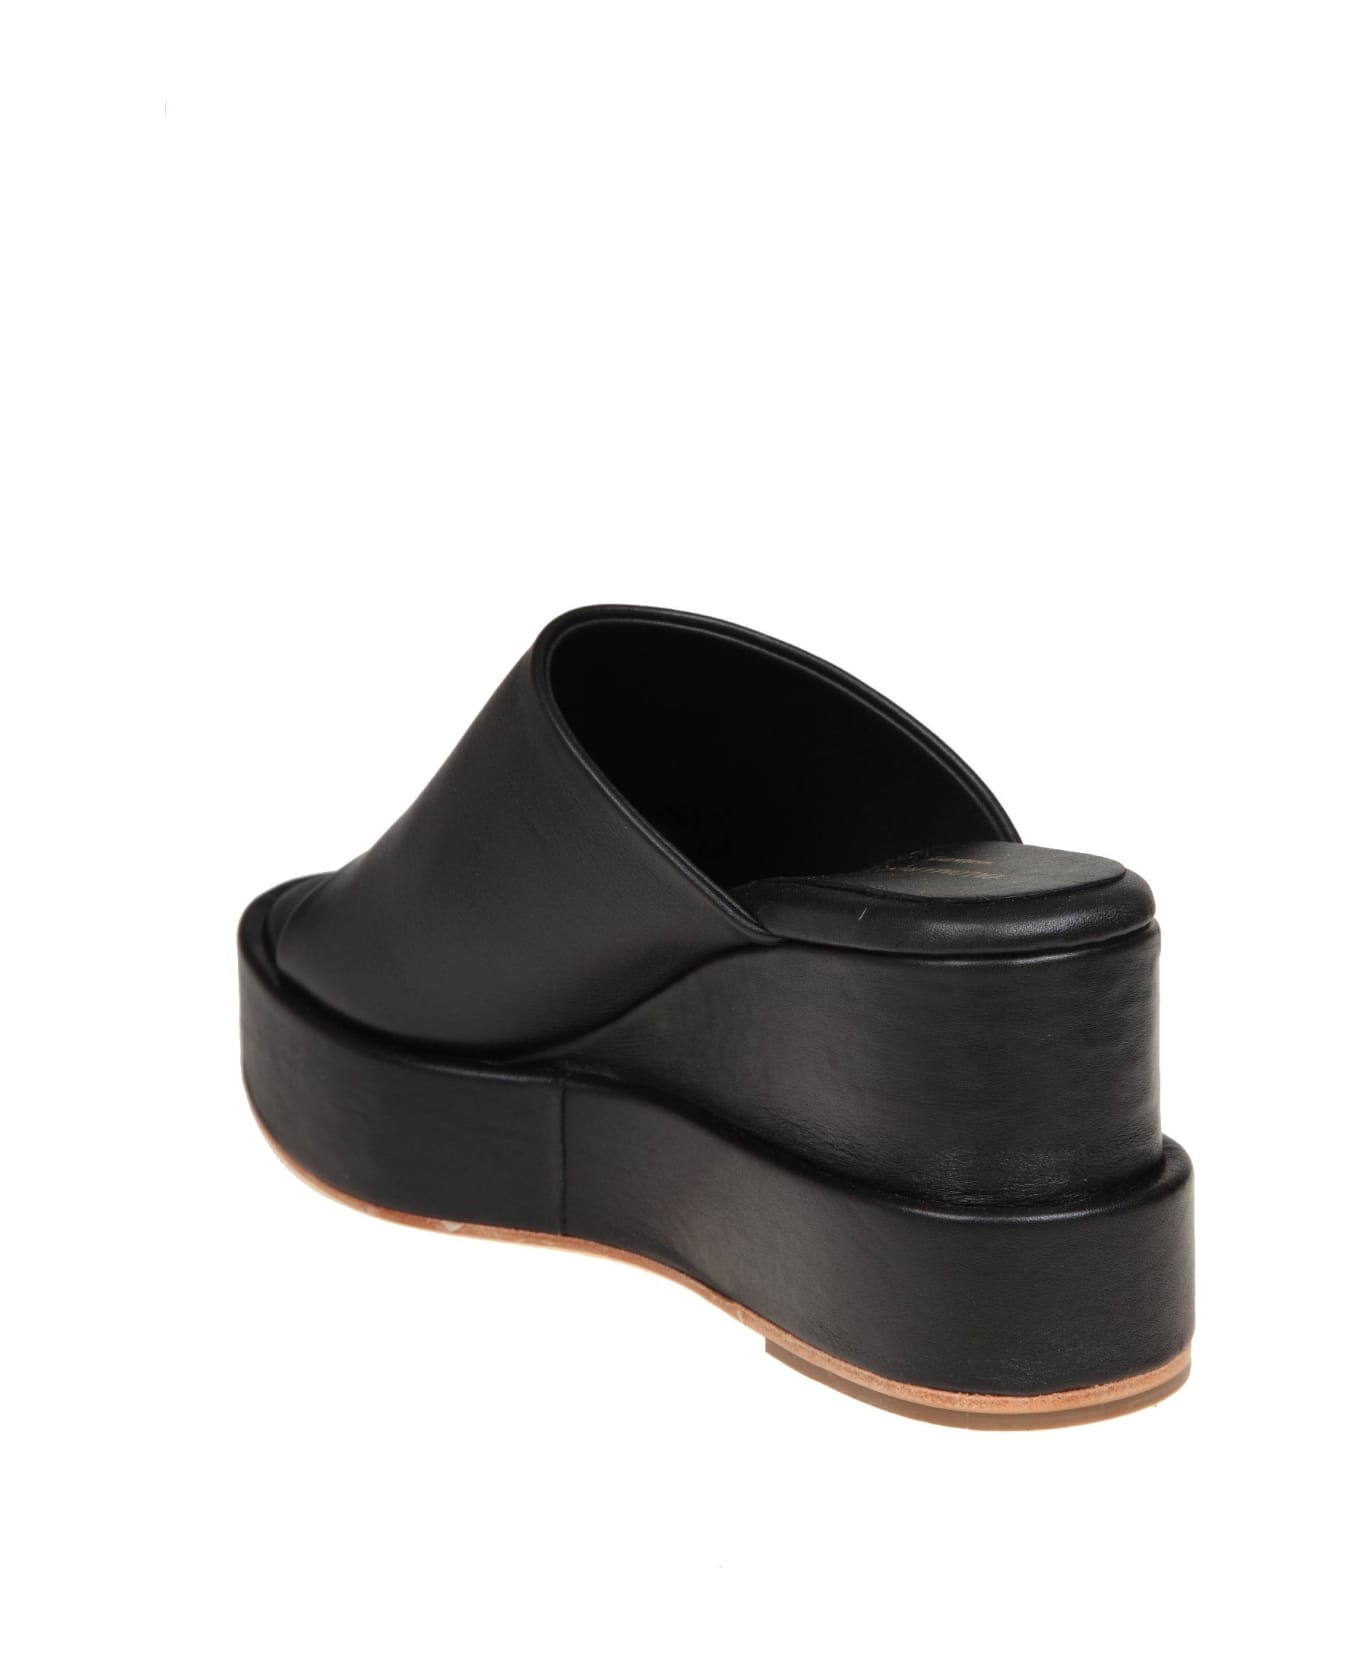 Paloma Barceló Marit Wedge Sandal In Black Leather - Black サンダル